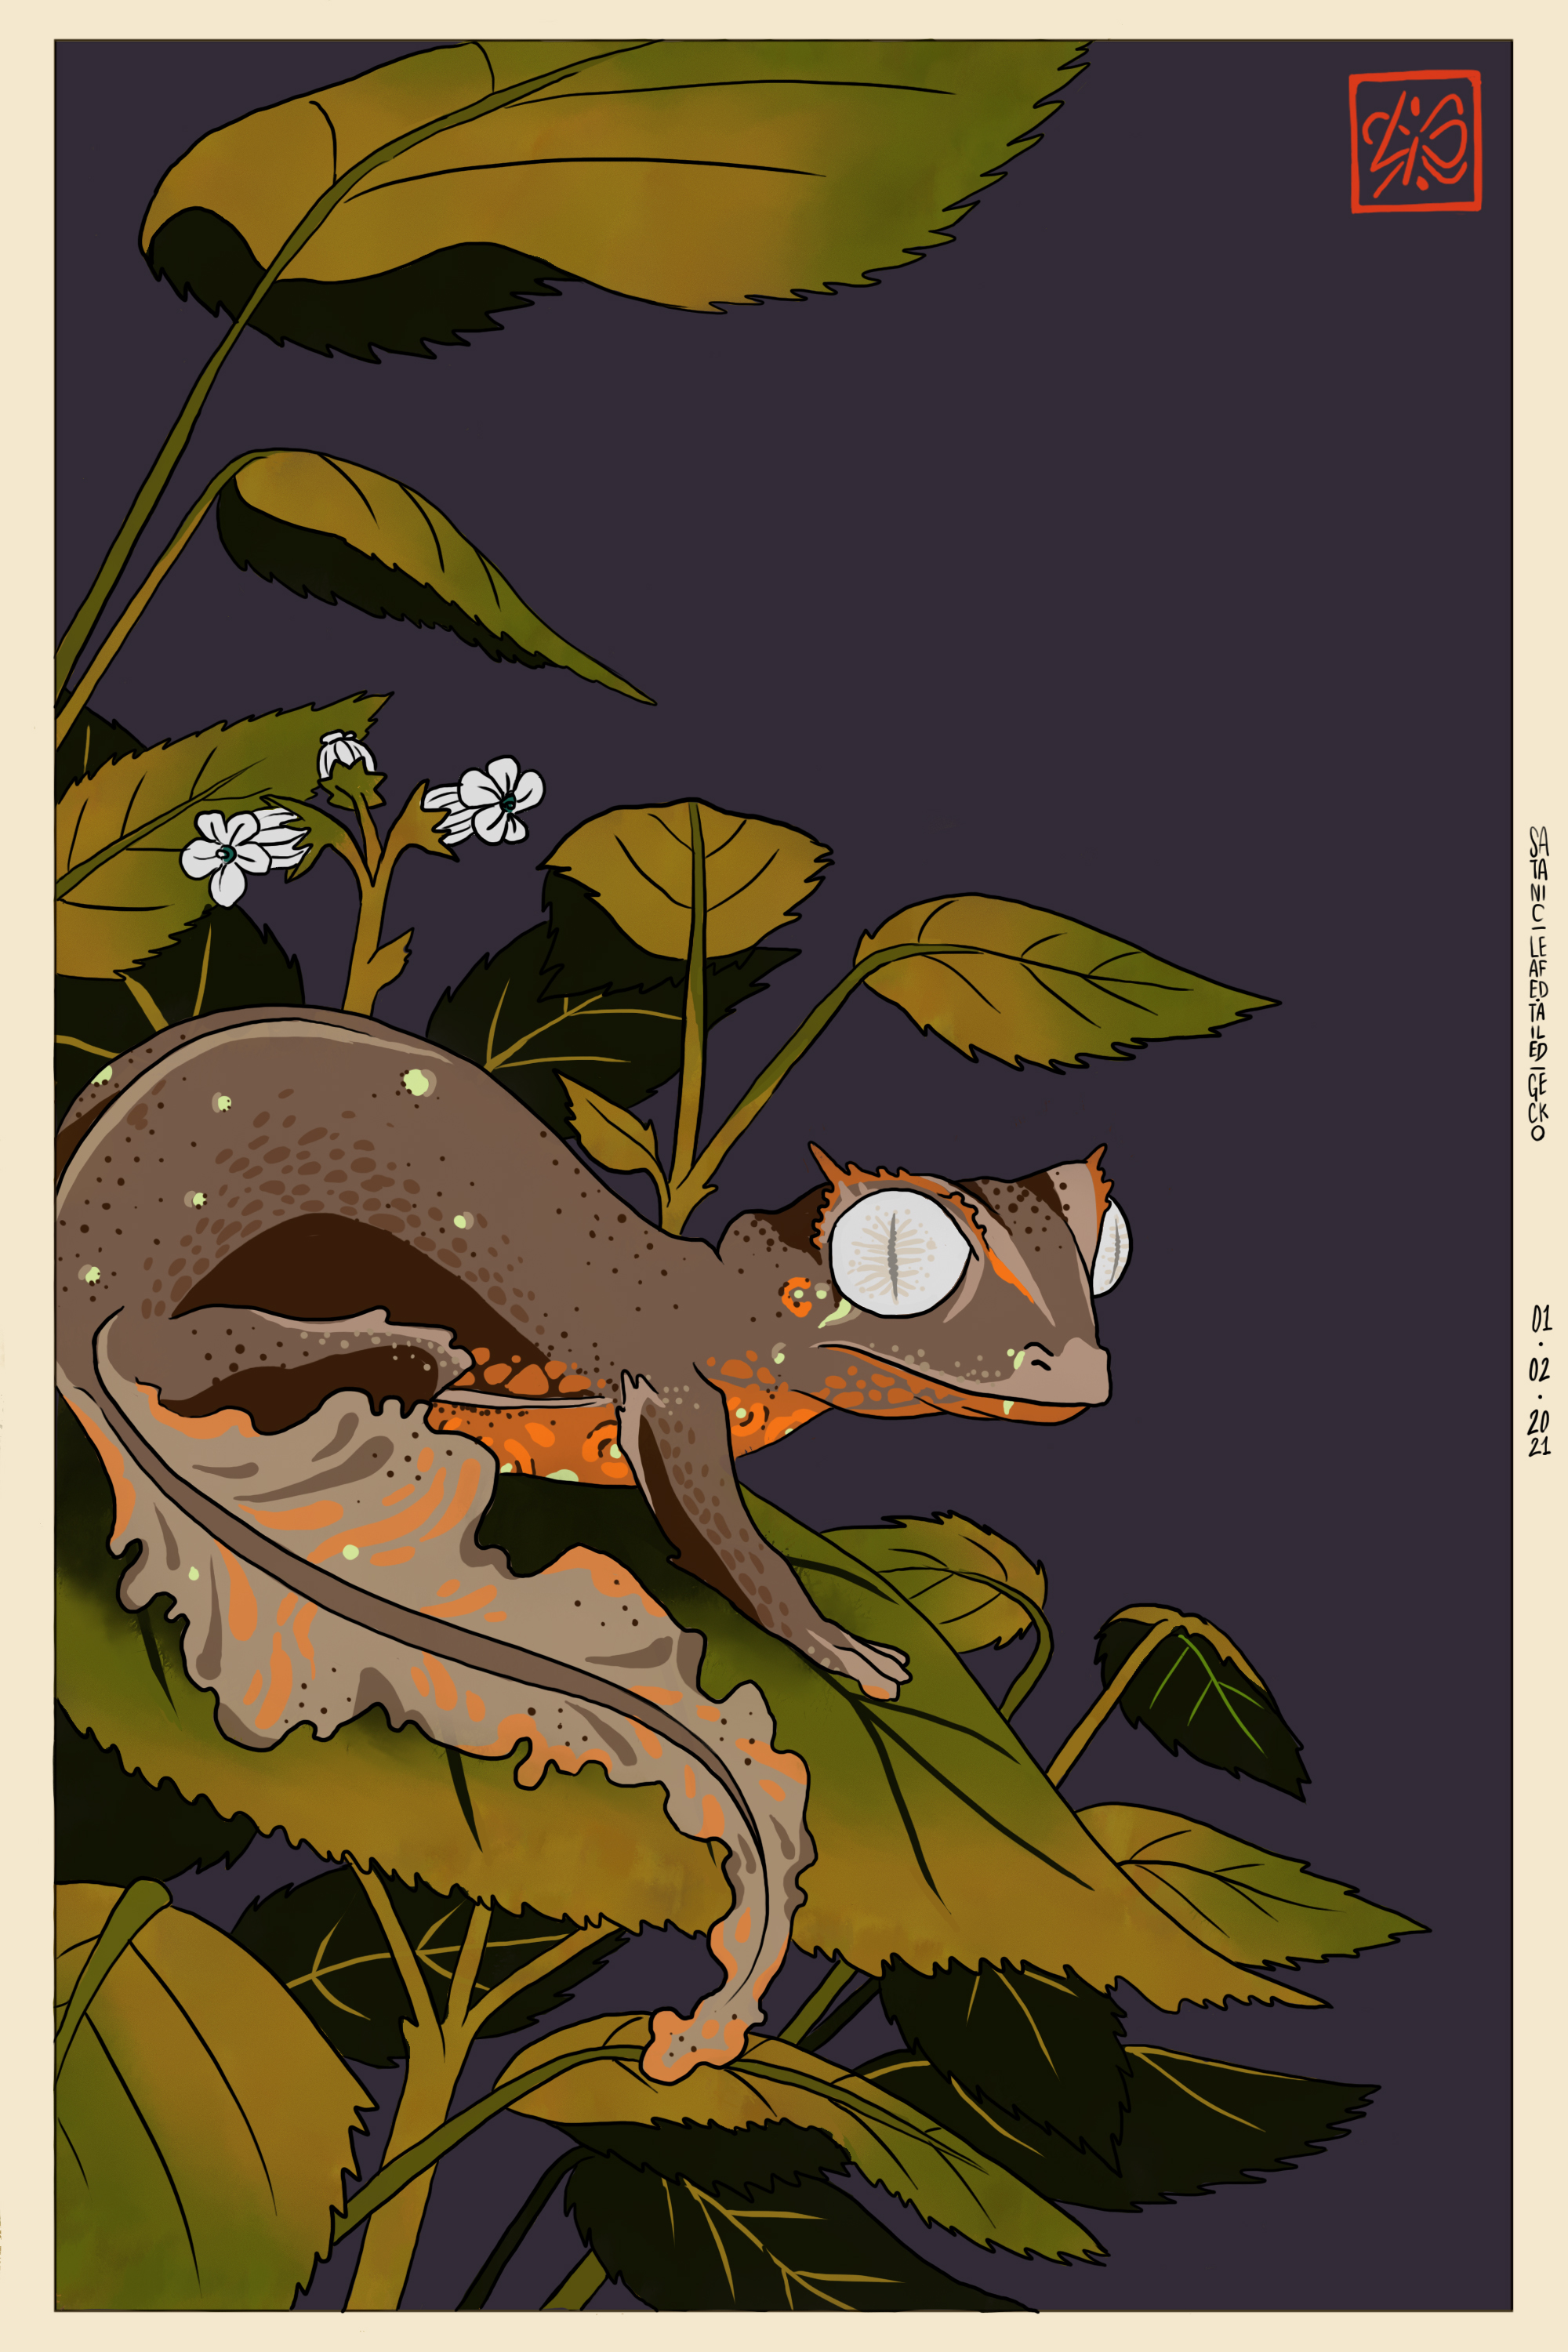 Satanic leaf tailed gecko